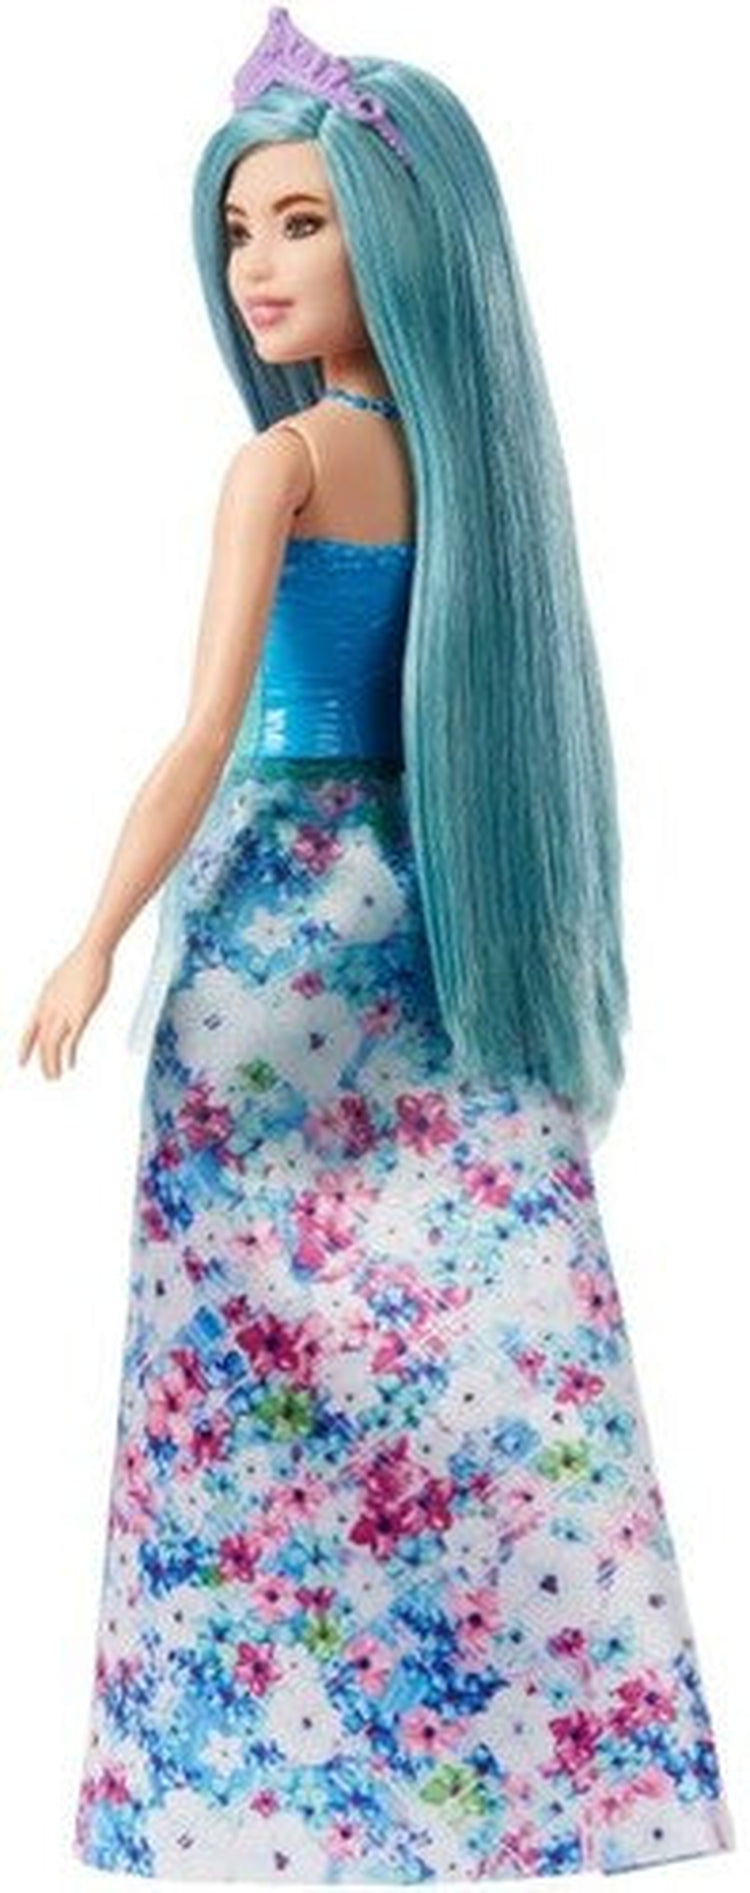 Mattel - Barbie Dreamtopia Princess with Teal Hair and Purple Tiara